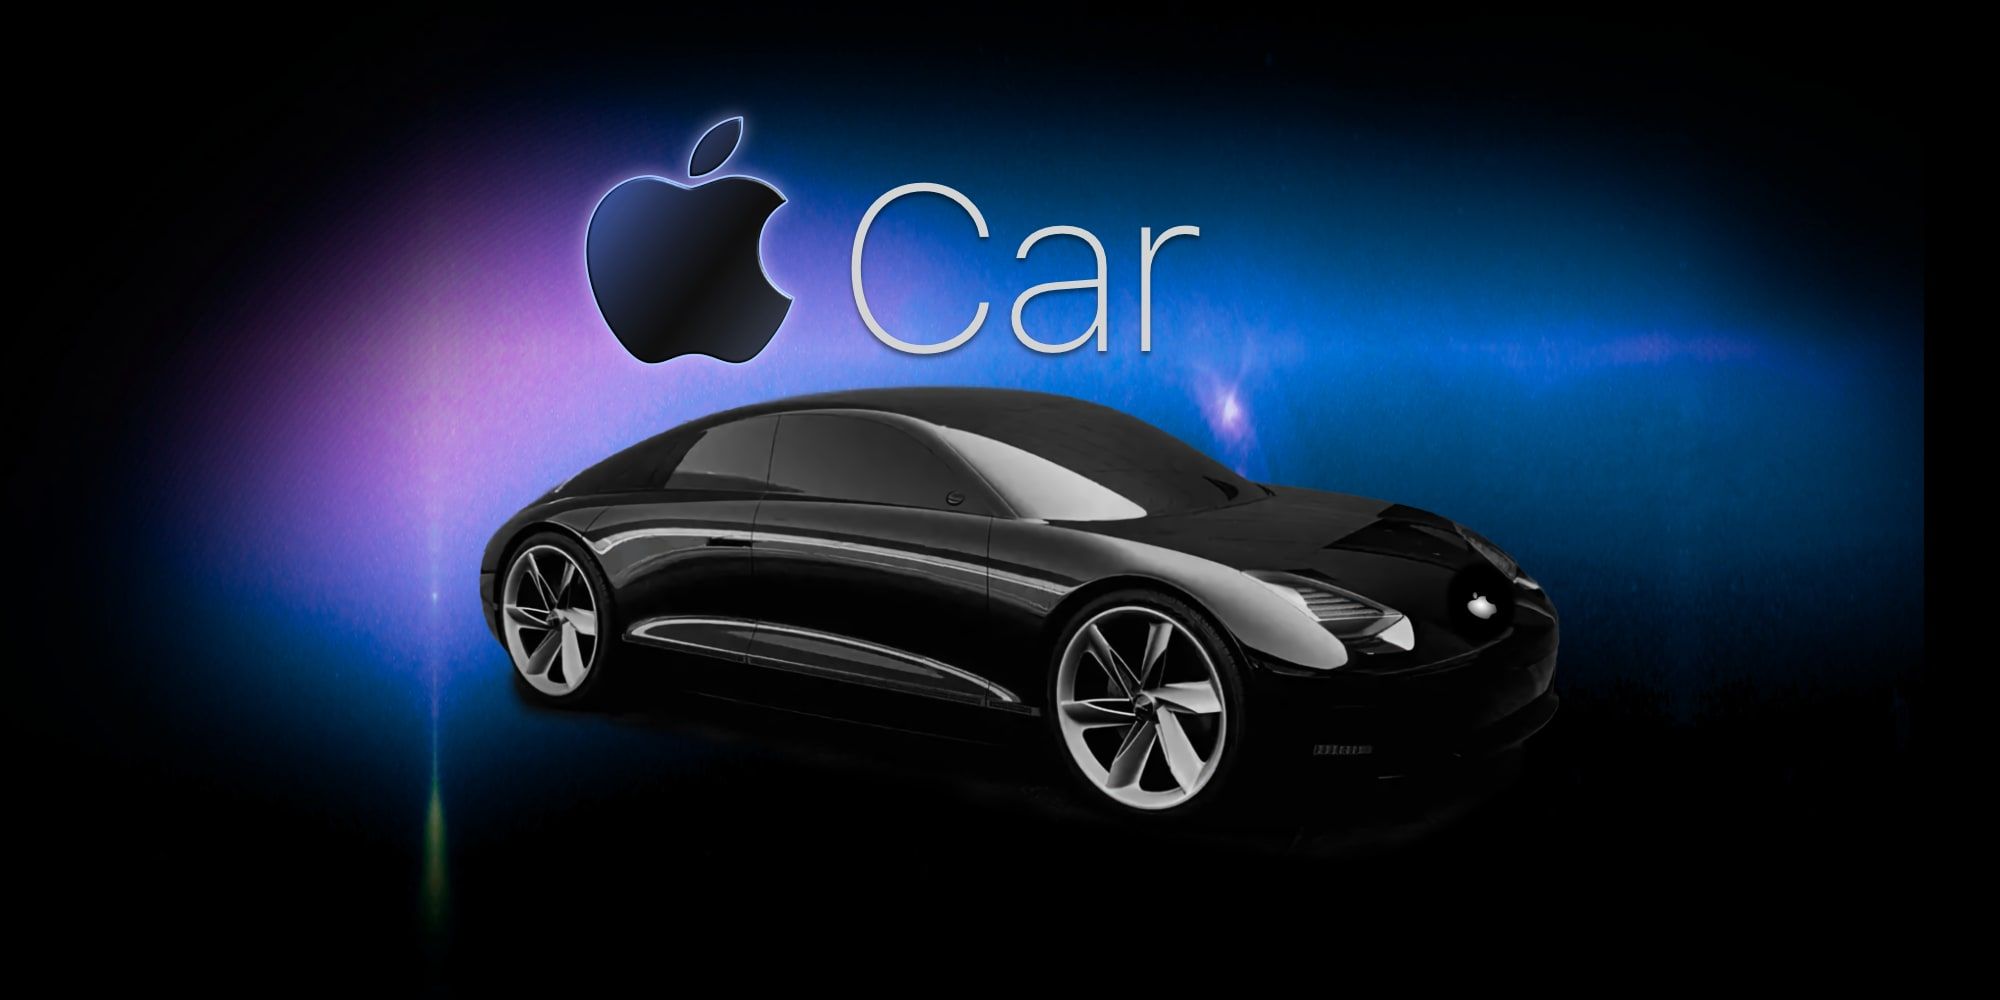 Apple Car Render Based On Hyundai Prophecy Concept Car